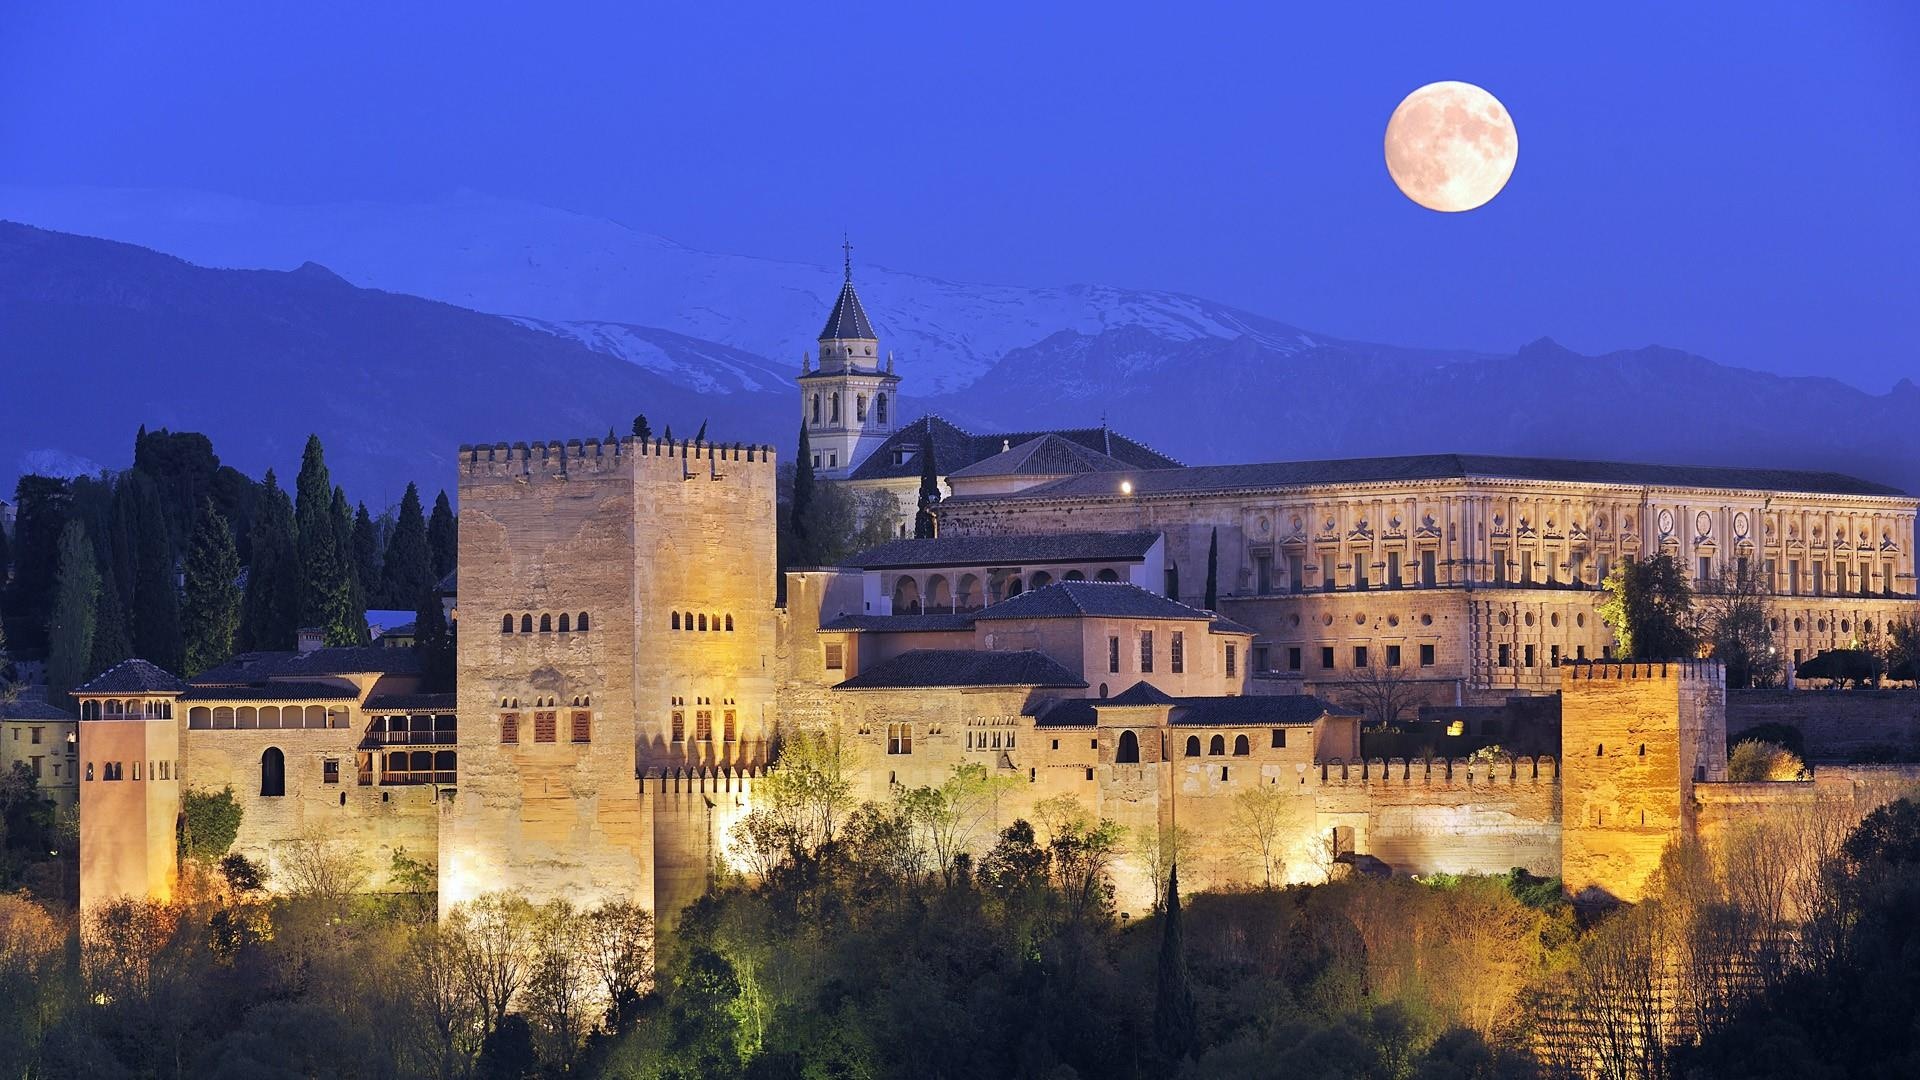 Alhambra Palace, Striking wallpapers, Breathtaking images, Mesmerizing beauty, 1920x1080 Full HD Desktop